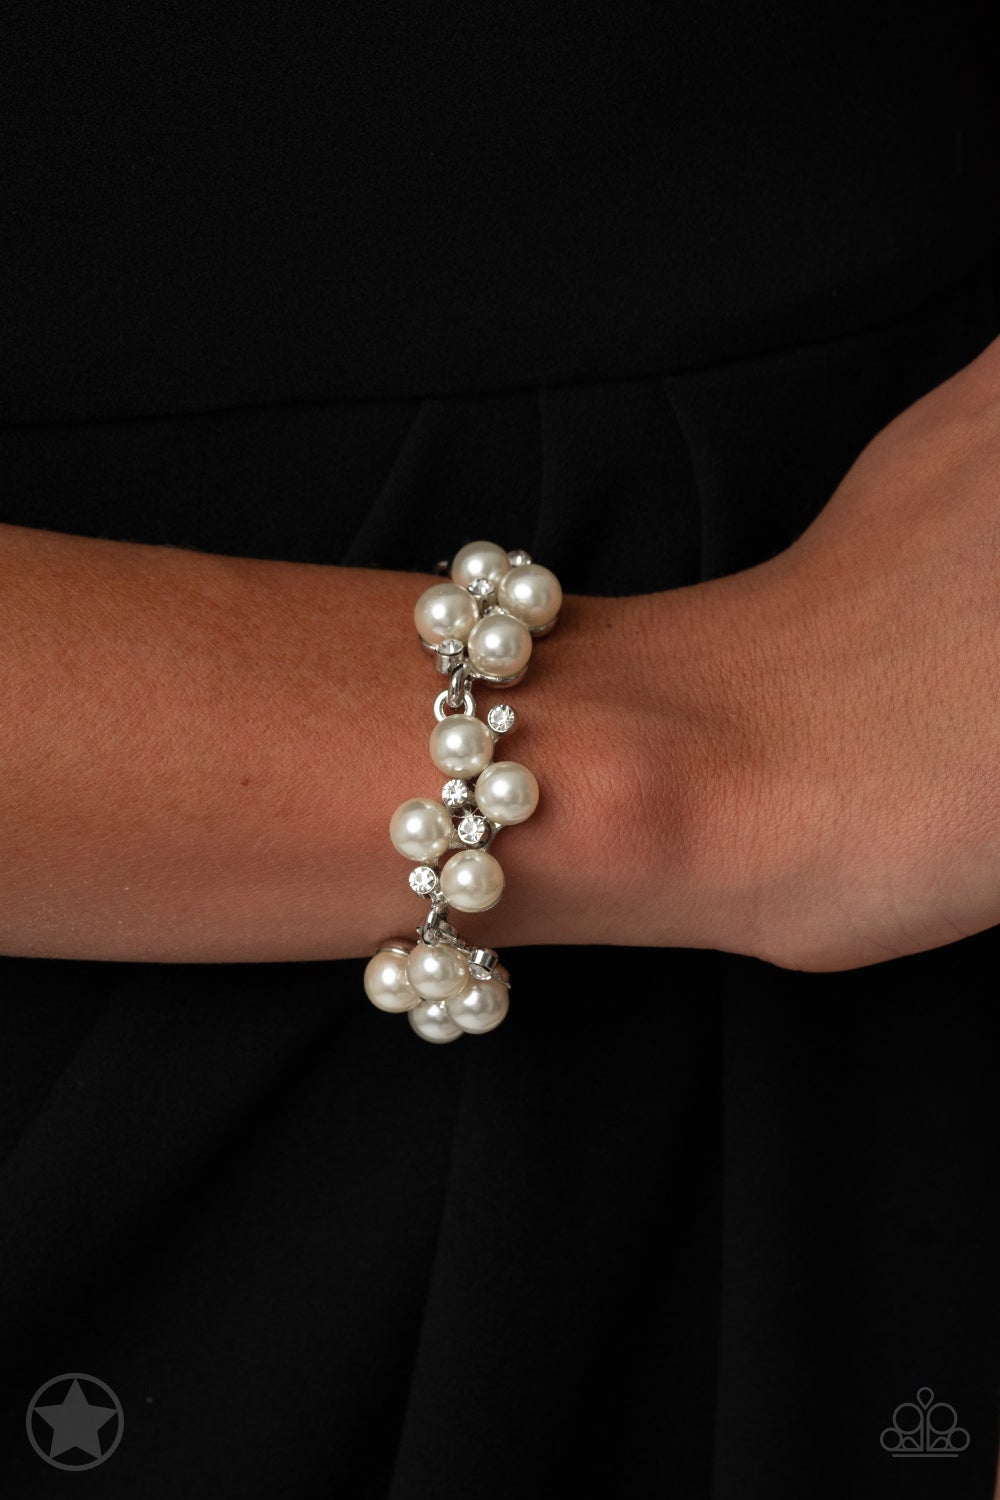 I Do - White Pearl Bracelet - Paparazzi Accessories - lightbox -CarasShop.com - $5 Jewelry by Cara Jewels